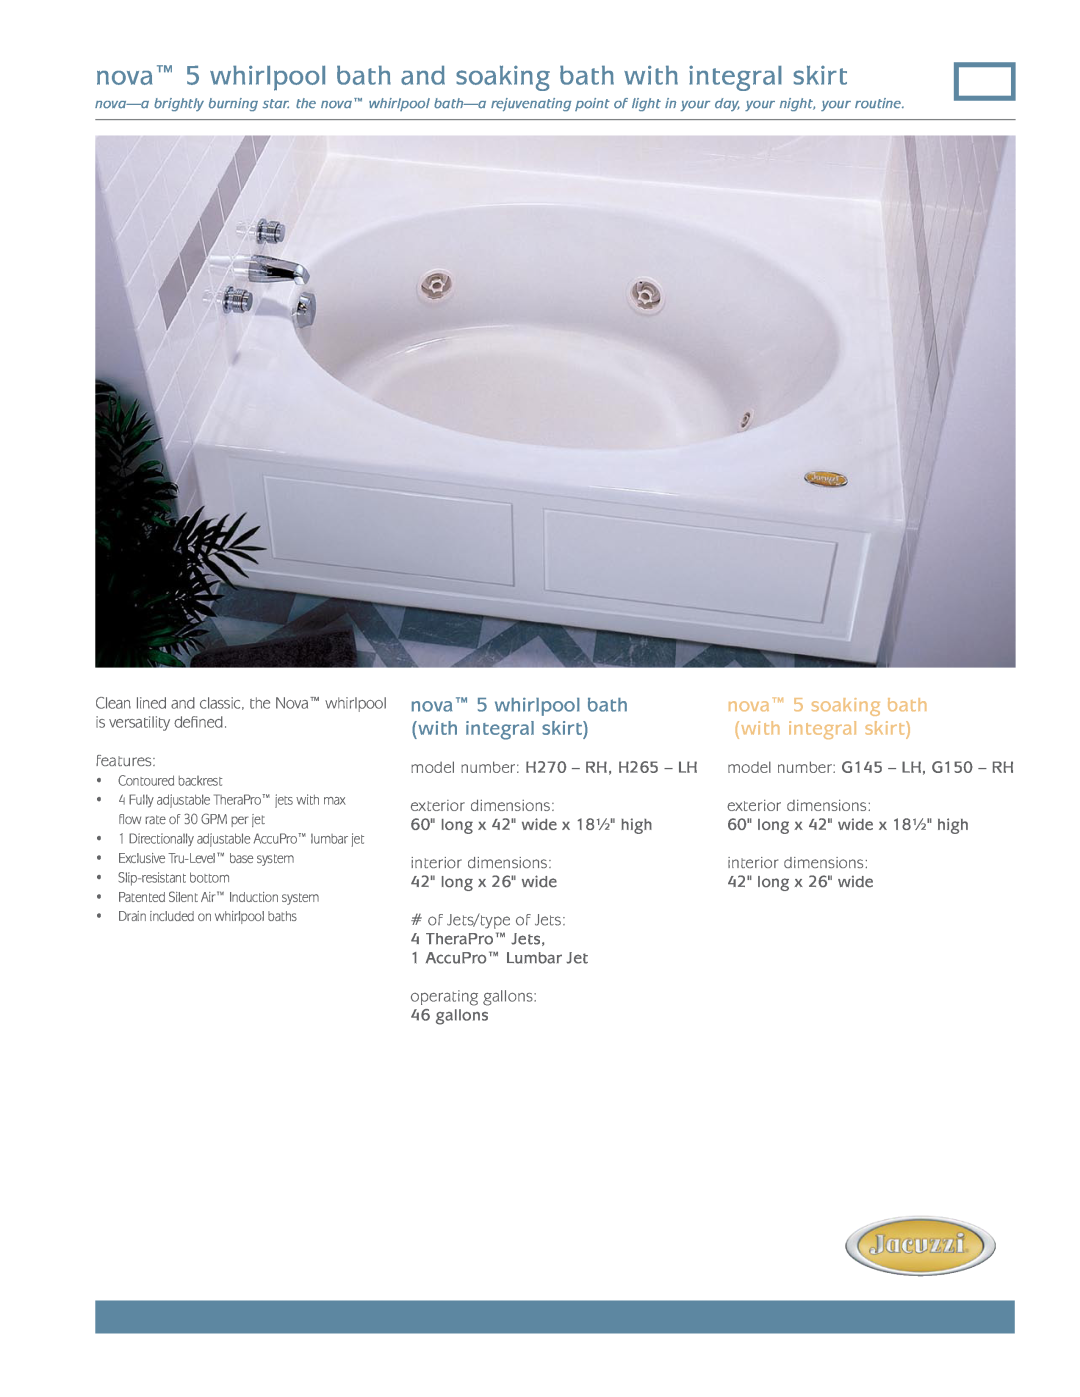 Jacuzzi FR79 dimensions nova 5 whirlpool bath and soaking bath with integral skirt, nova 5 soaking bath 